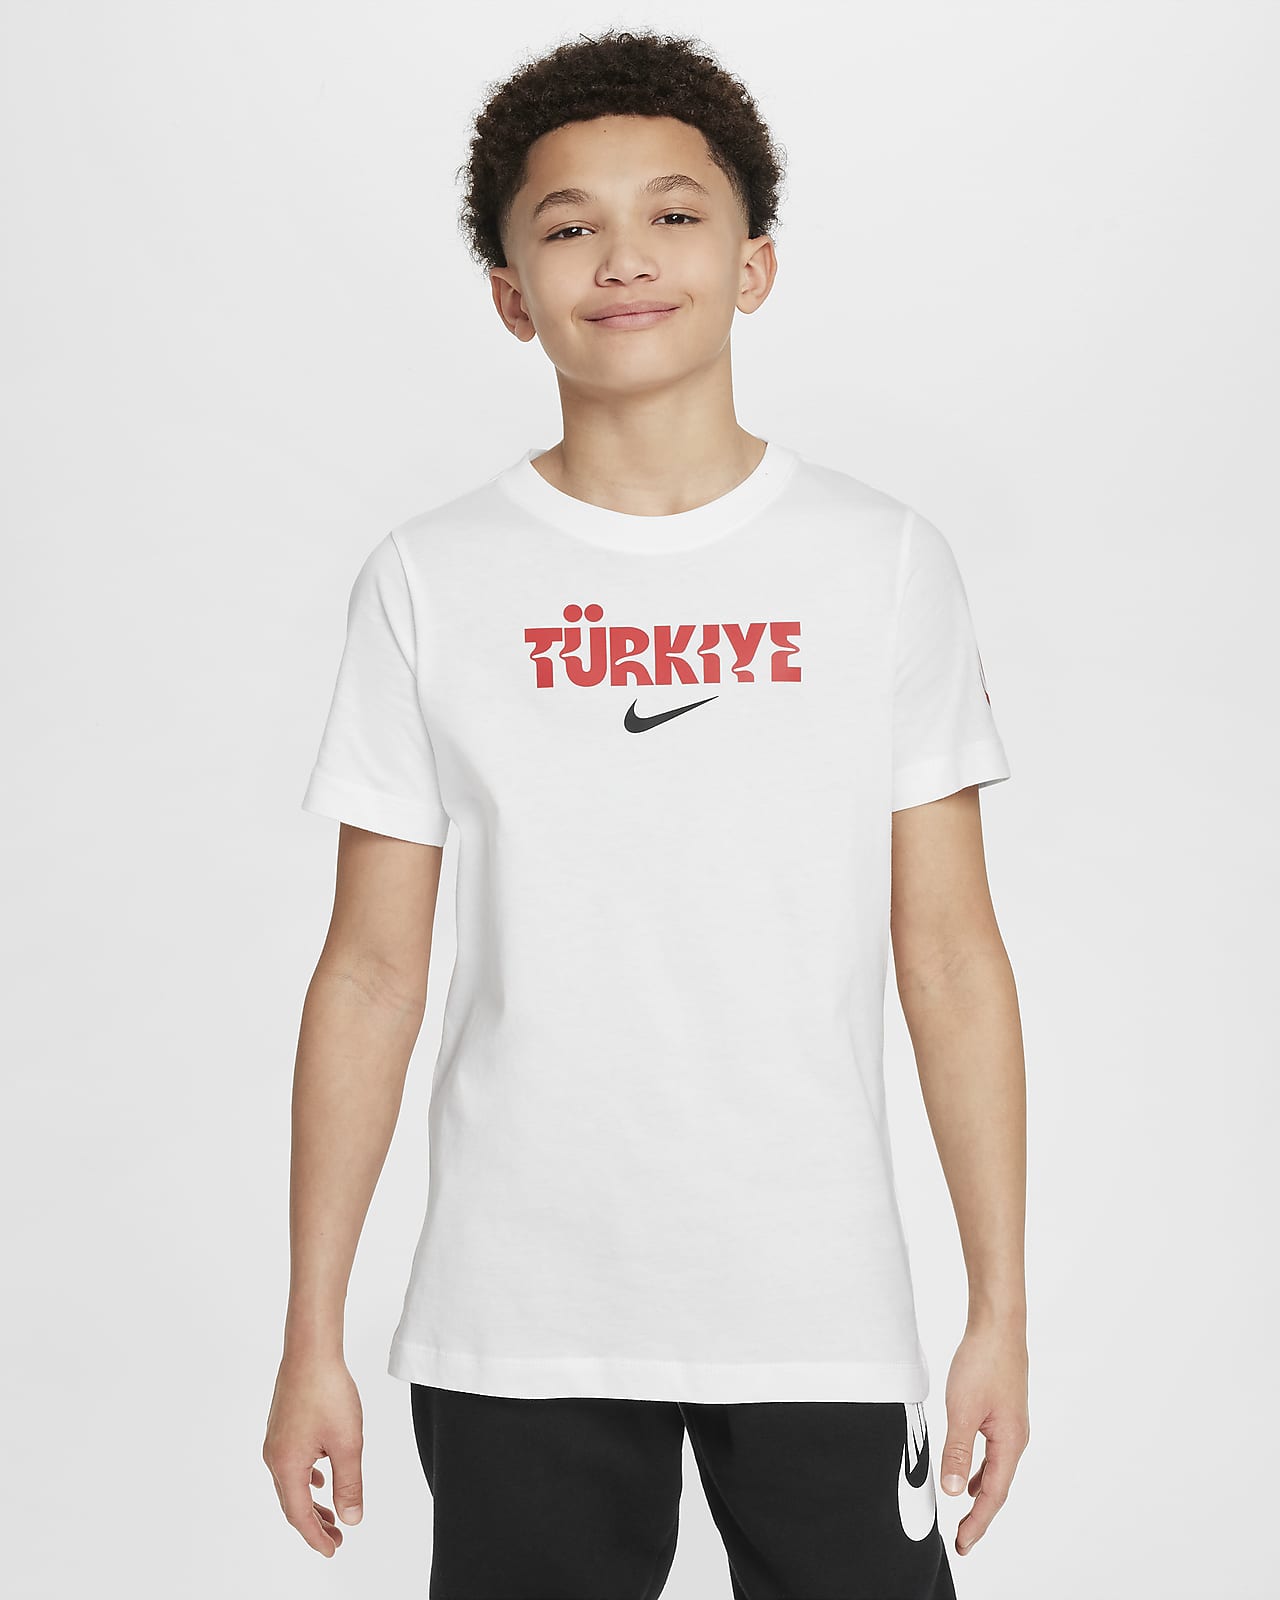 Türkiye Crest Older Kids' Nike Football T-Shirt